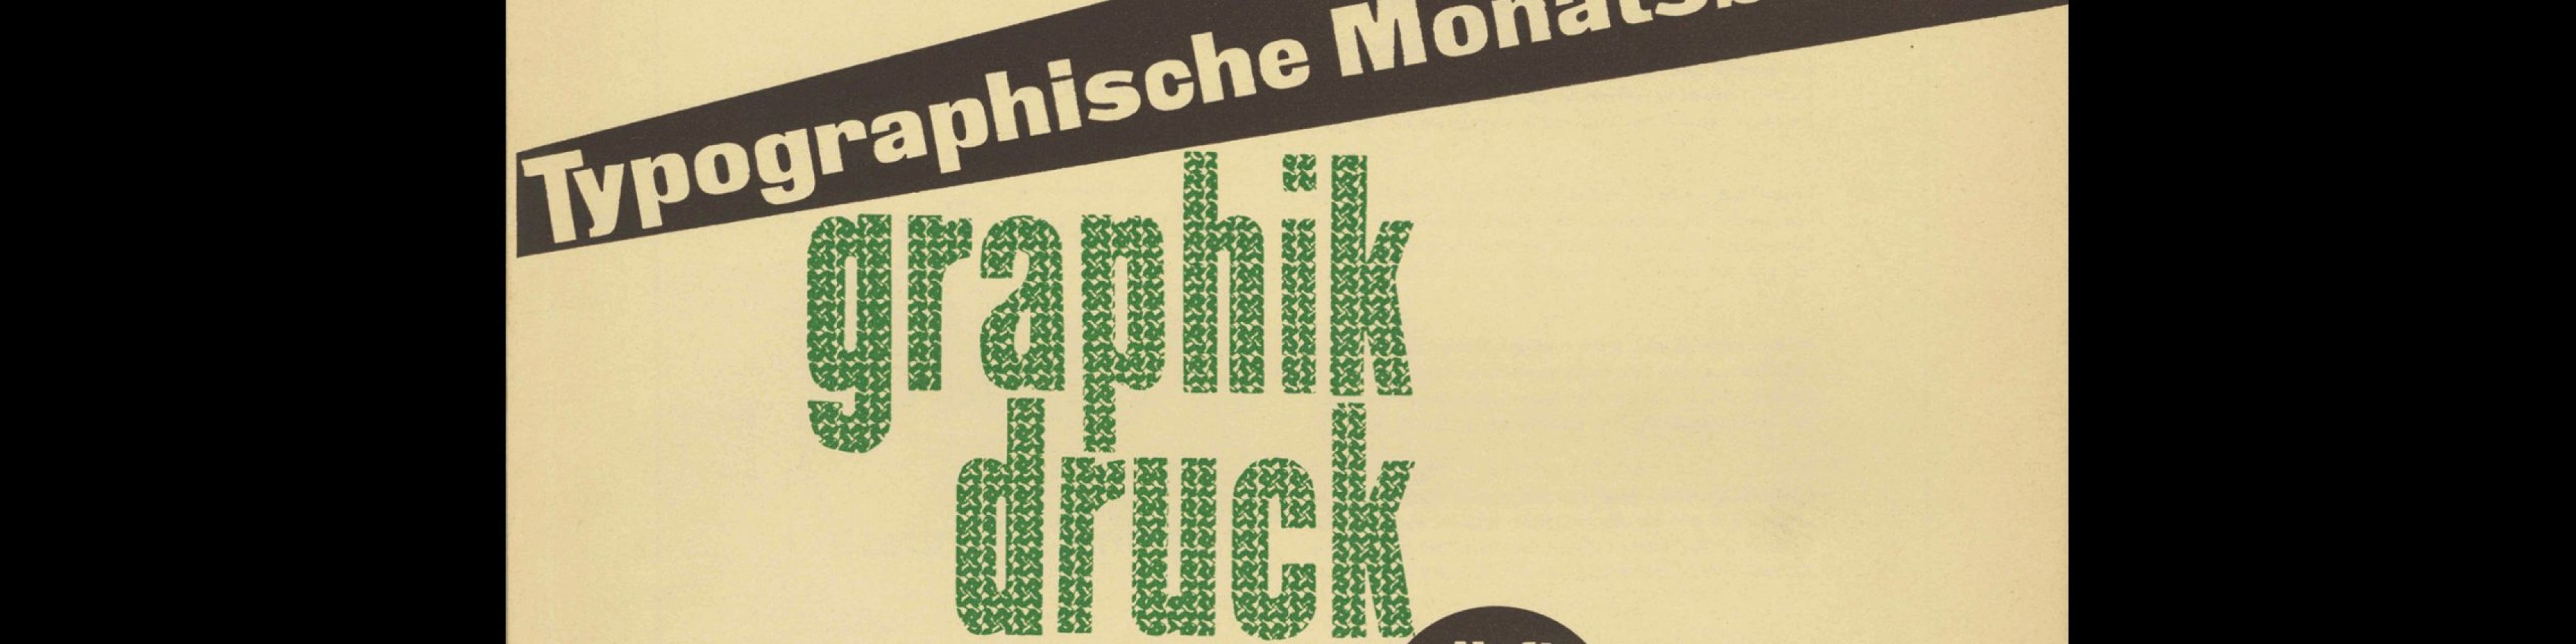 Typografische Monatsblätter, 9-10, 1937